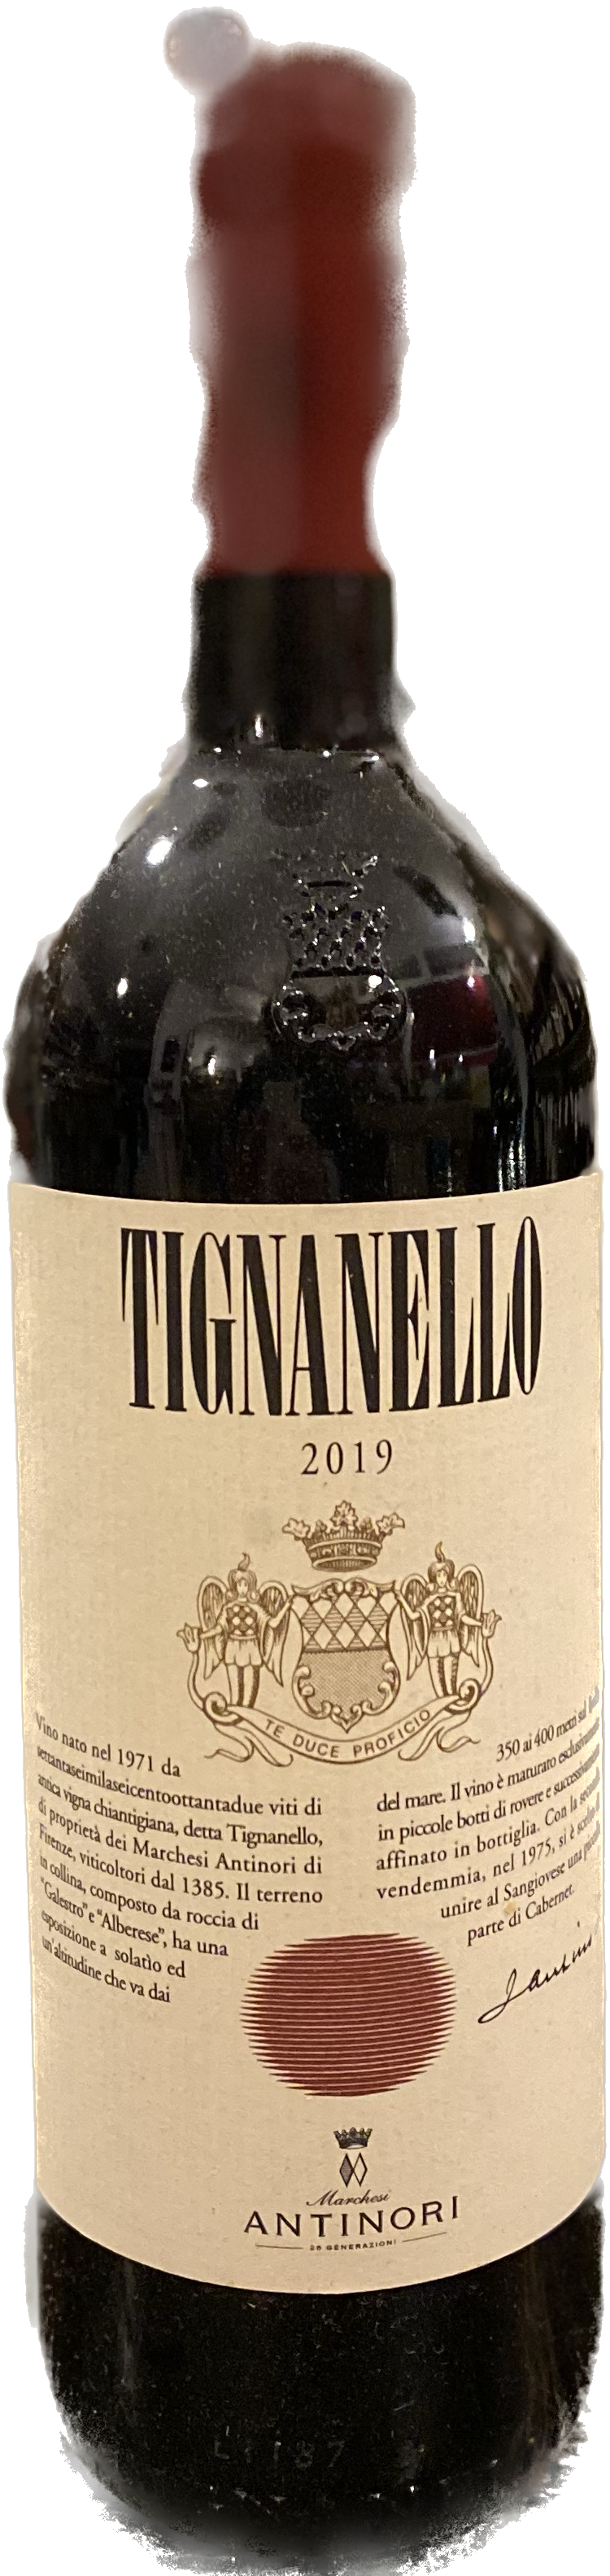 Tignanello 2019 Toscana